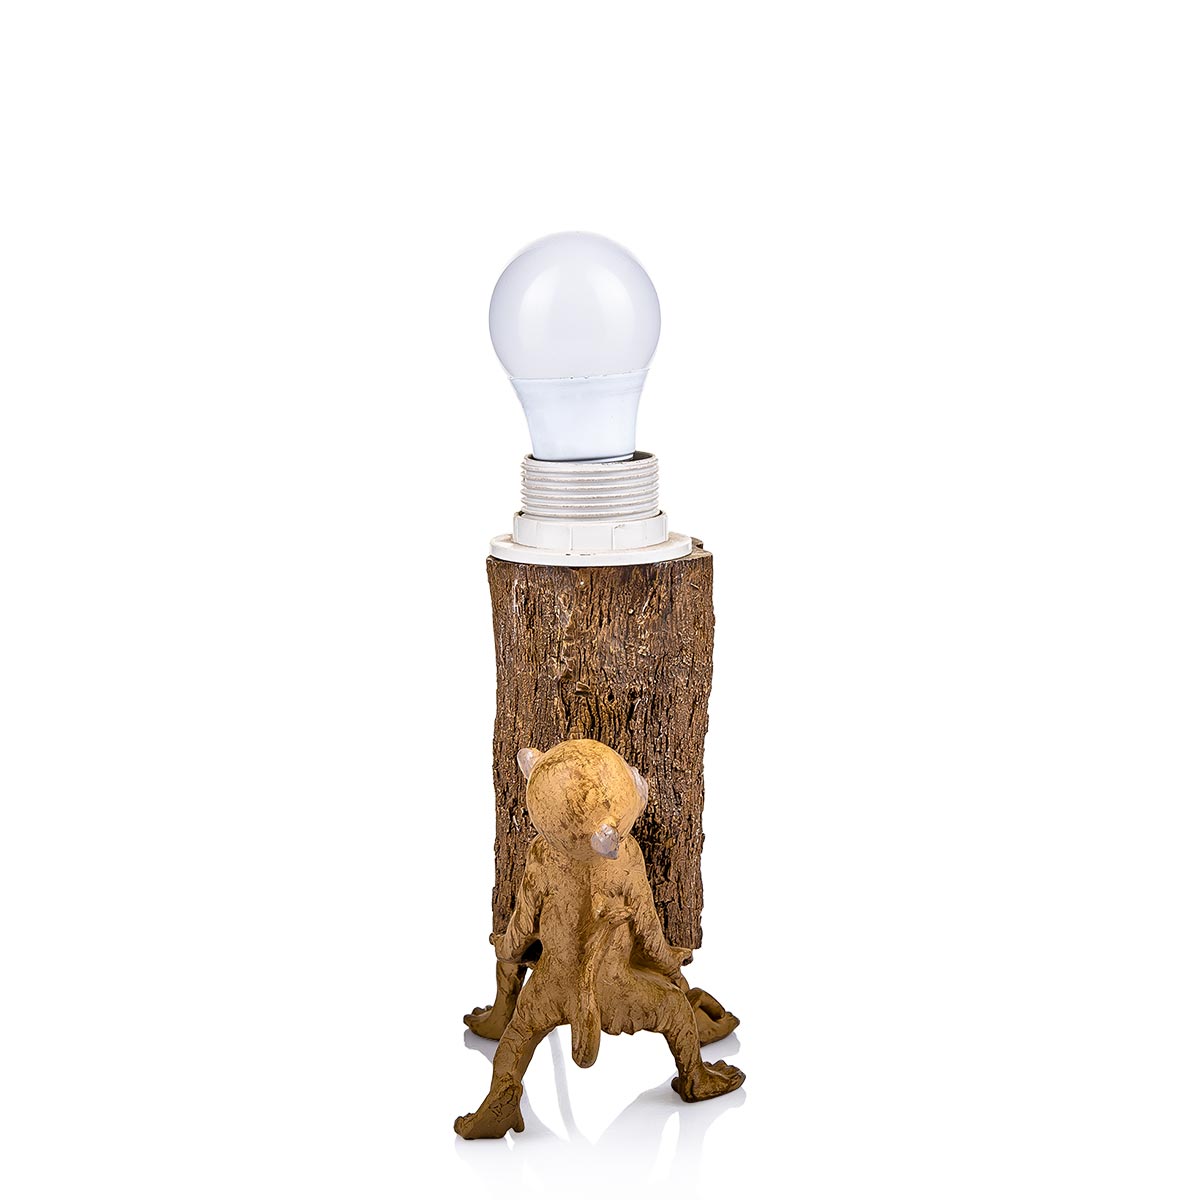 Stump Bonnet Monkeys Lamp